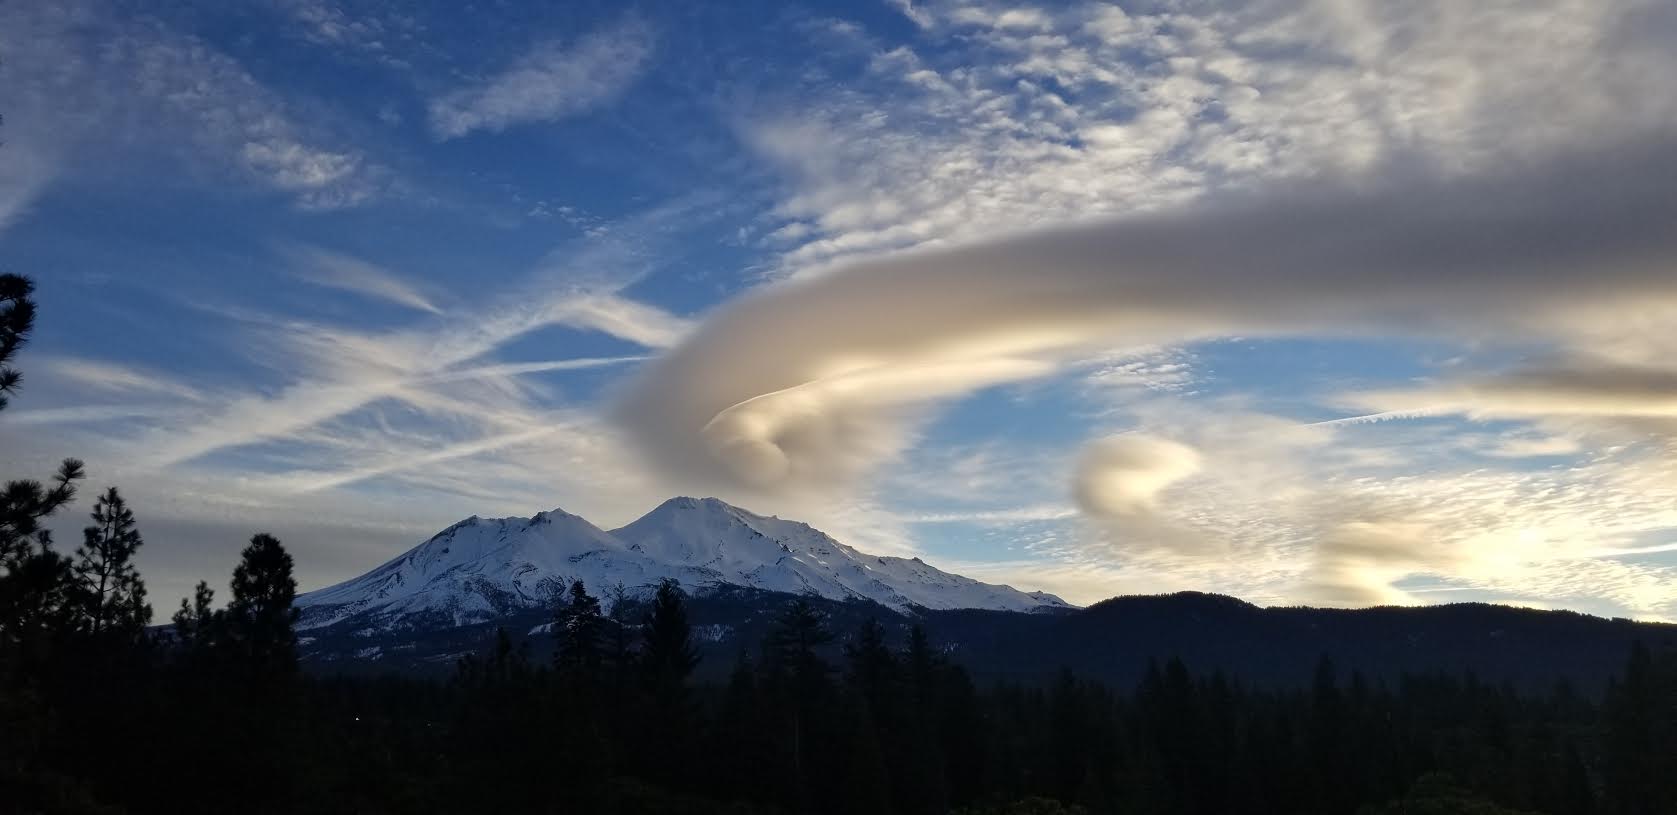 A swirling lenticular cloud over Mt. Shasta.